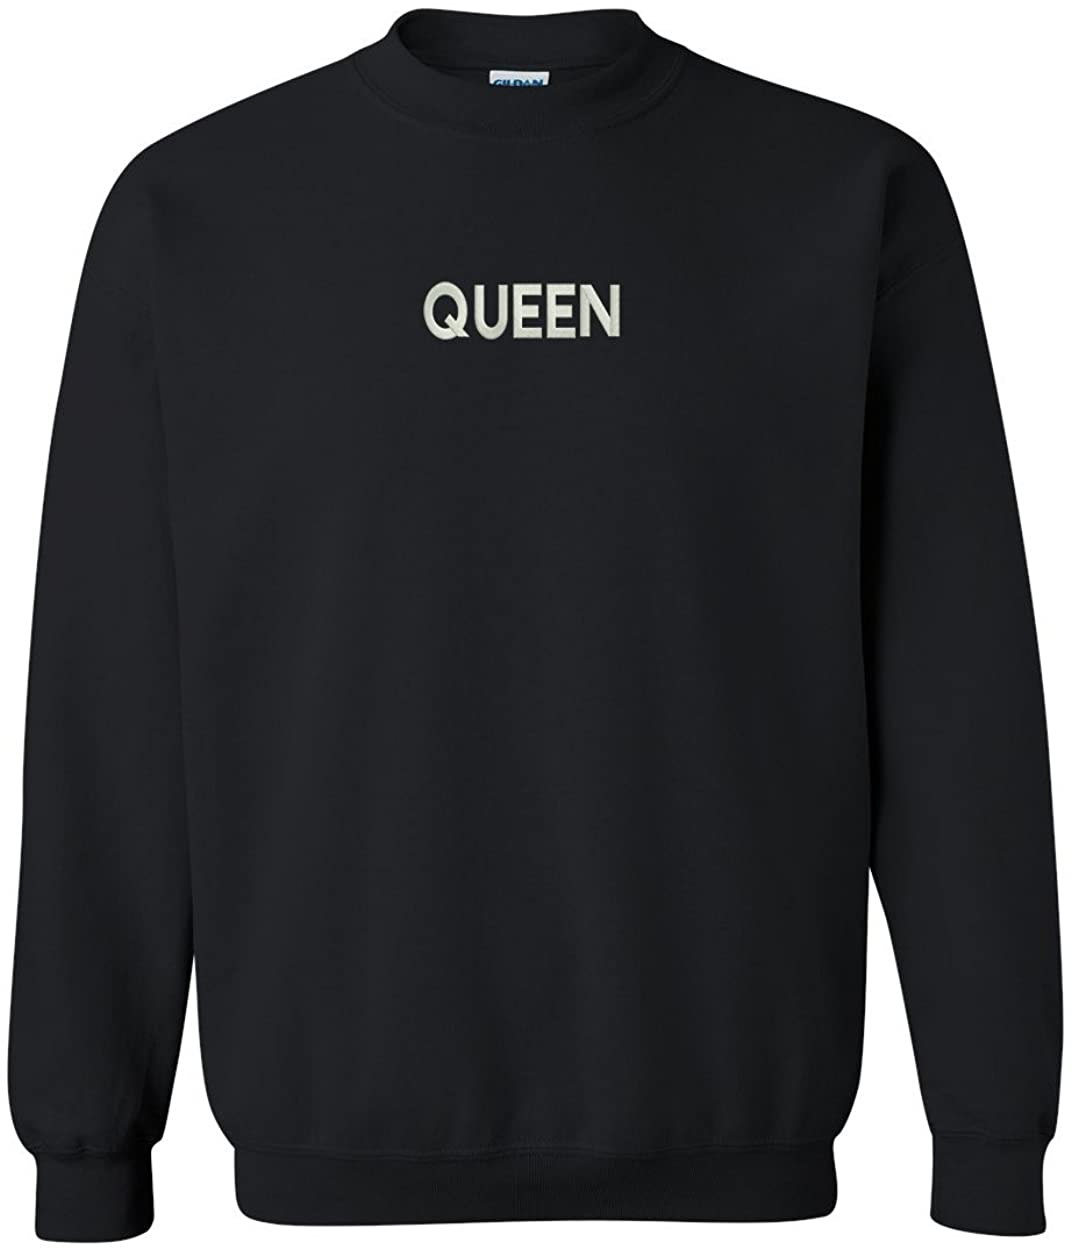 Trendy Apparel Shop Queen Embroidered Crewneck Sweatshirt